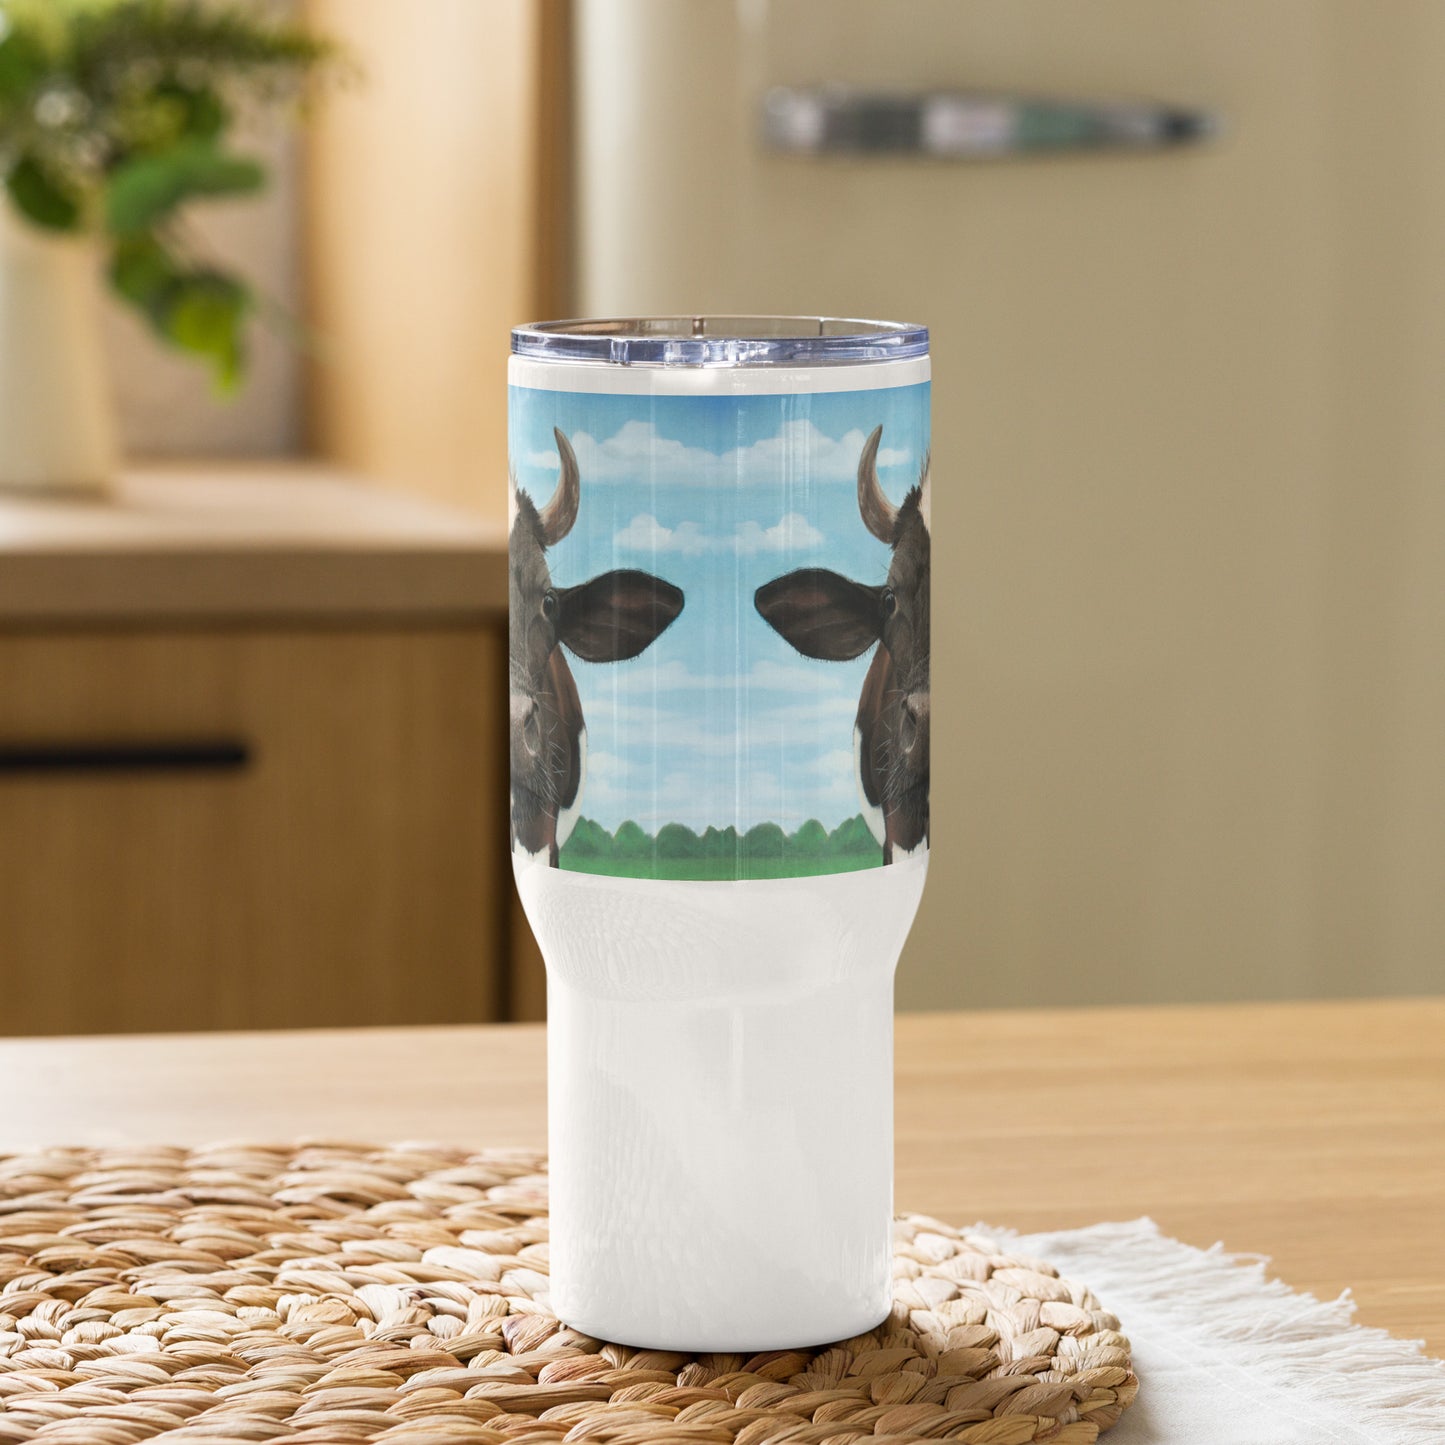 Cow Travel mug with a handle